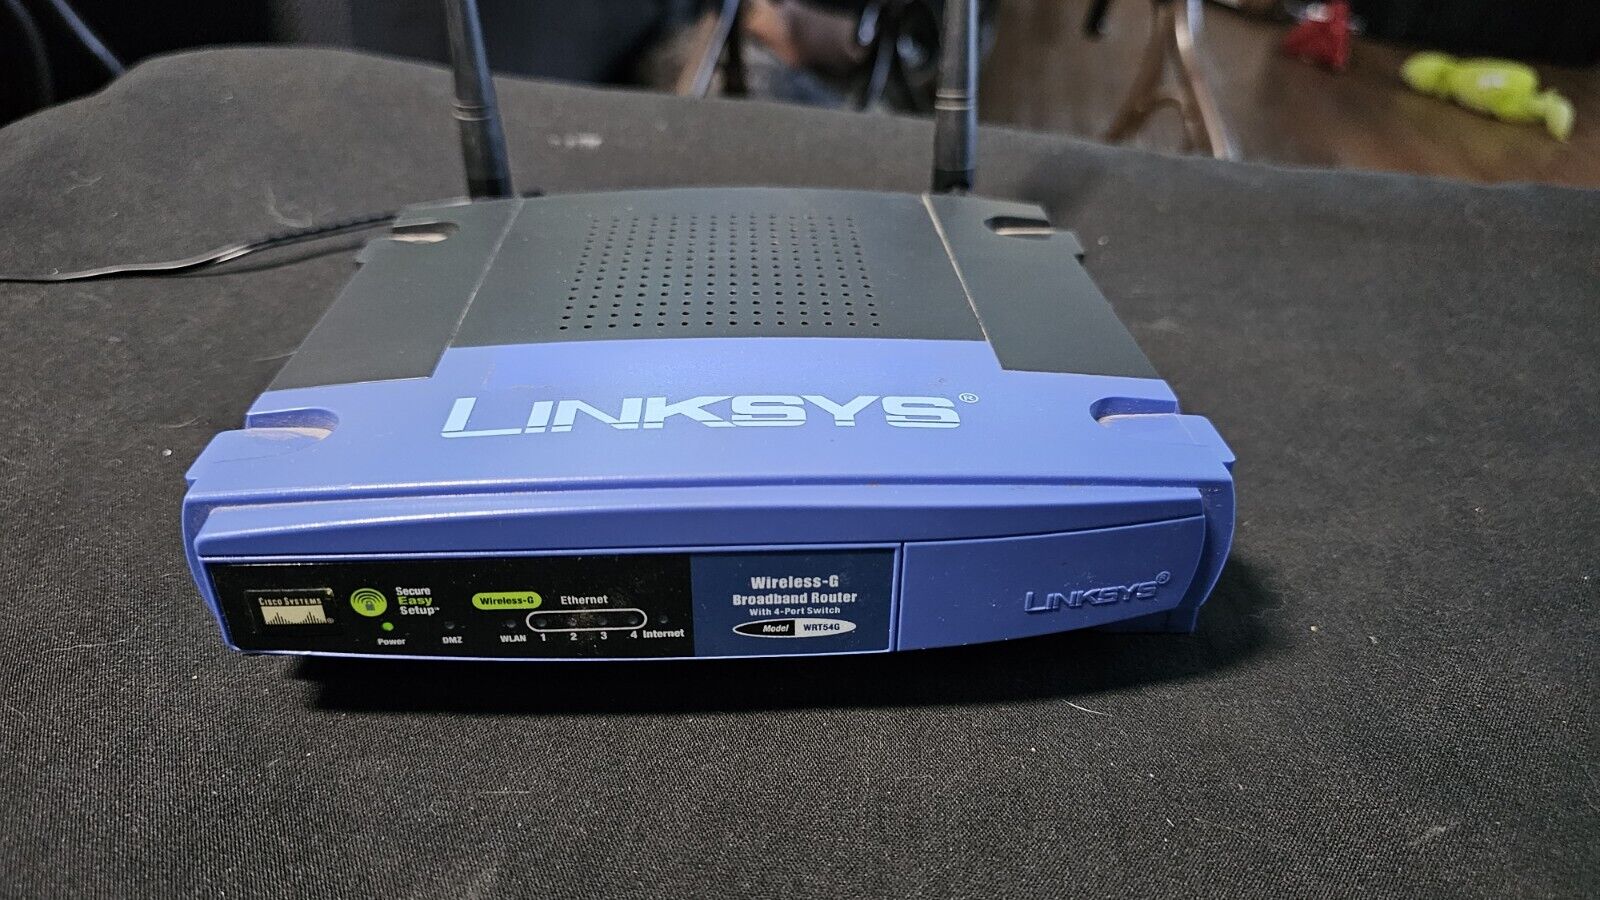 Linksys WRT54G Wireless G WiFi Router Modem 54 Mbps Broadband 2.4 GHz 4 Ports